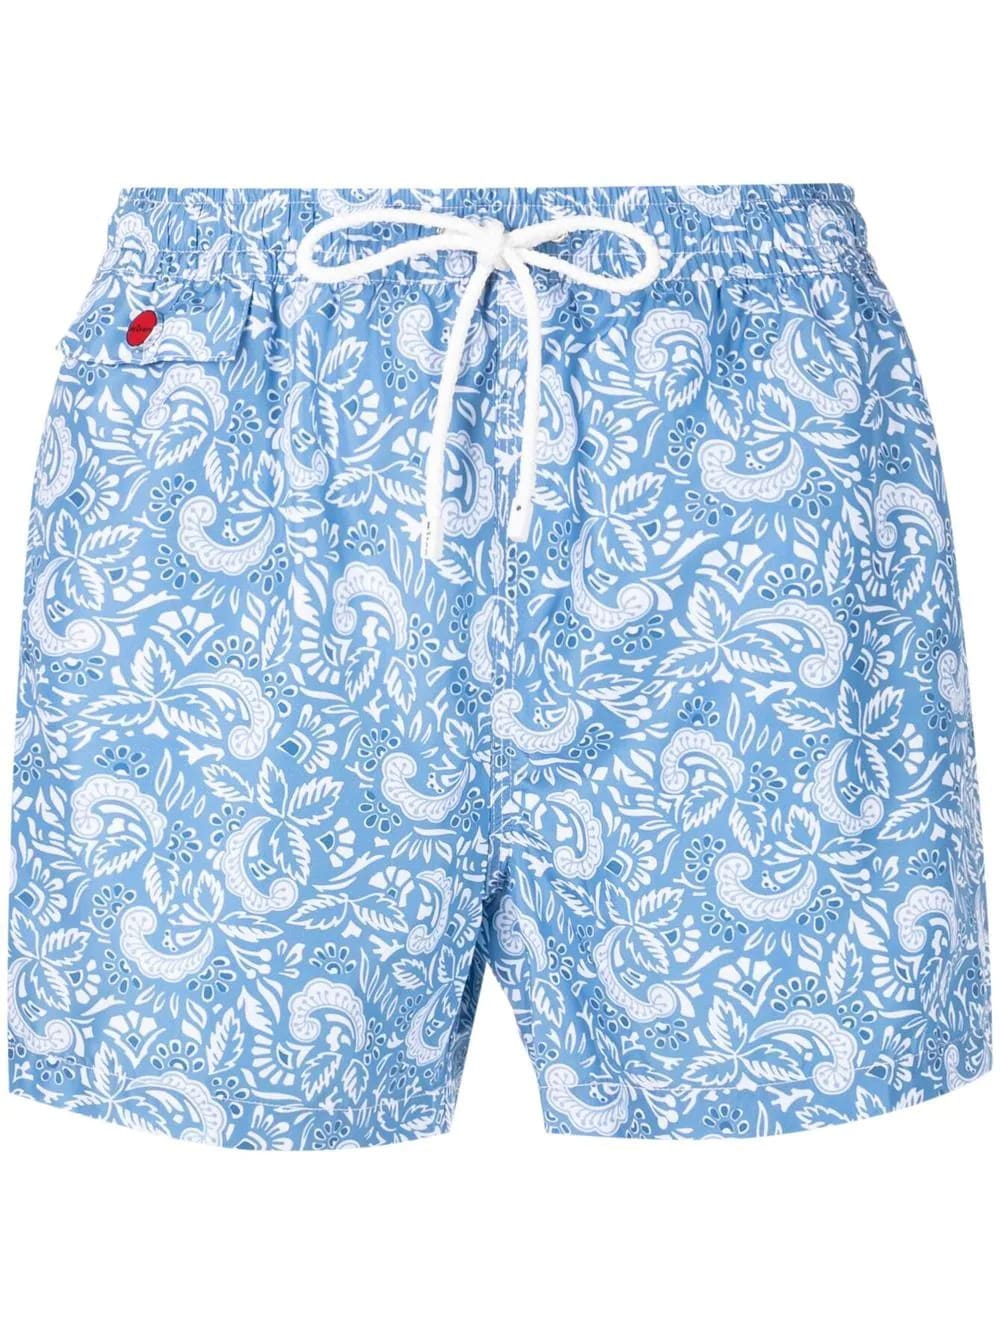 Kiton Light Blue Swim Shorts With White Floral Paisley Print